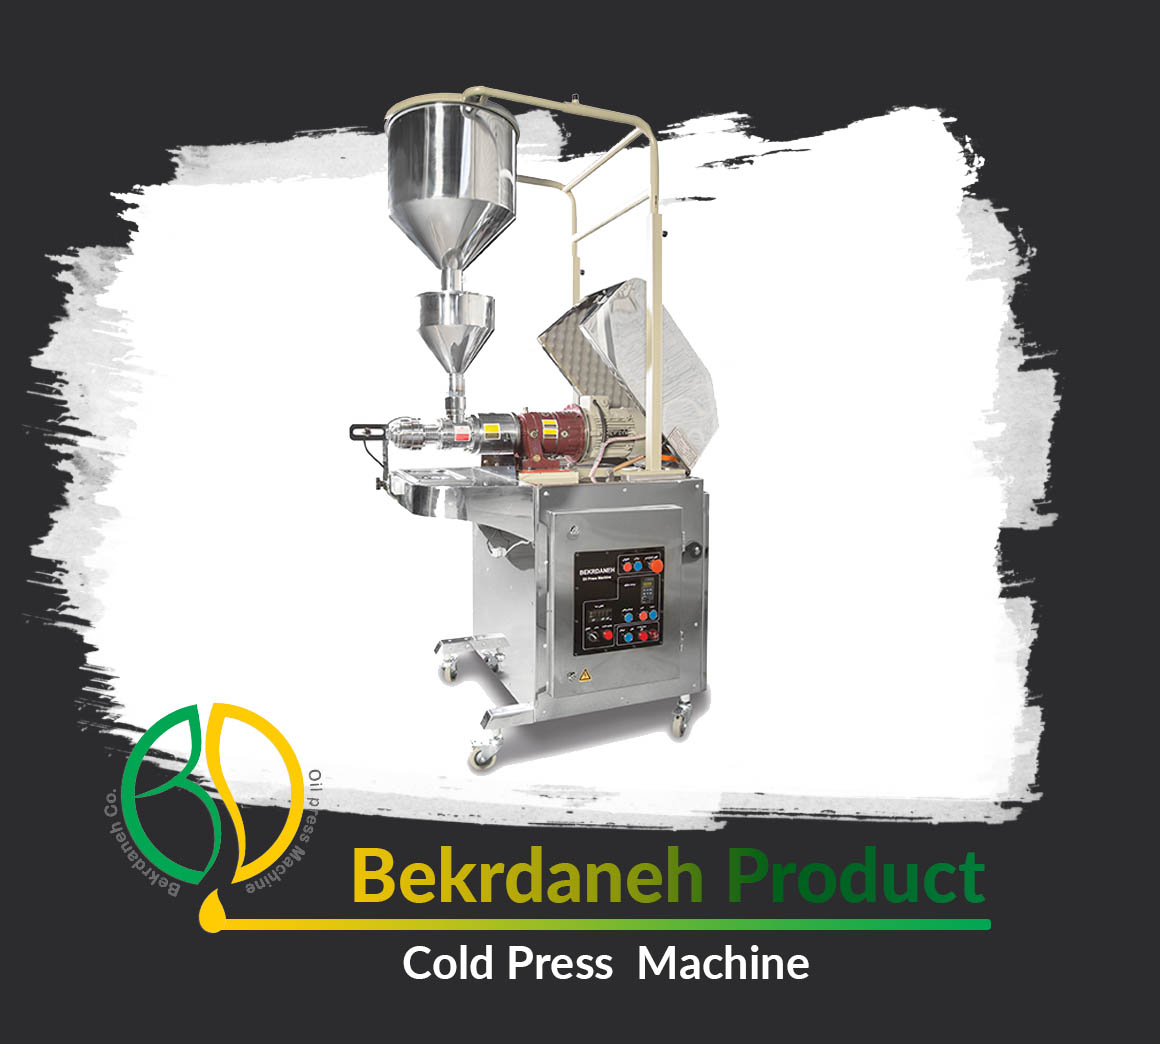 BD 85 Cold Press Machine